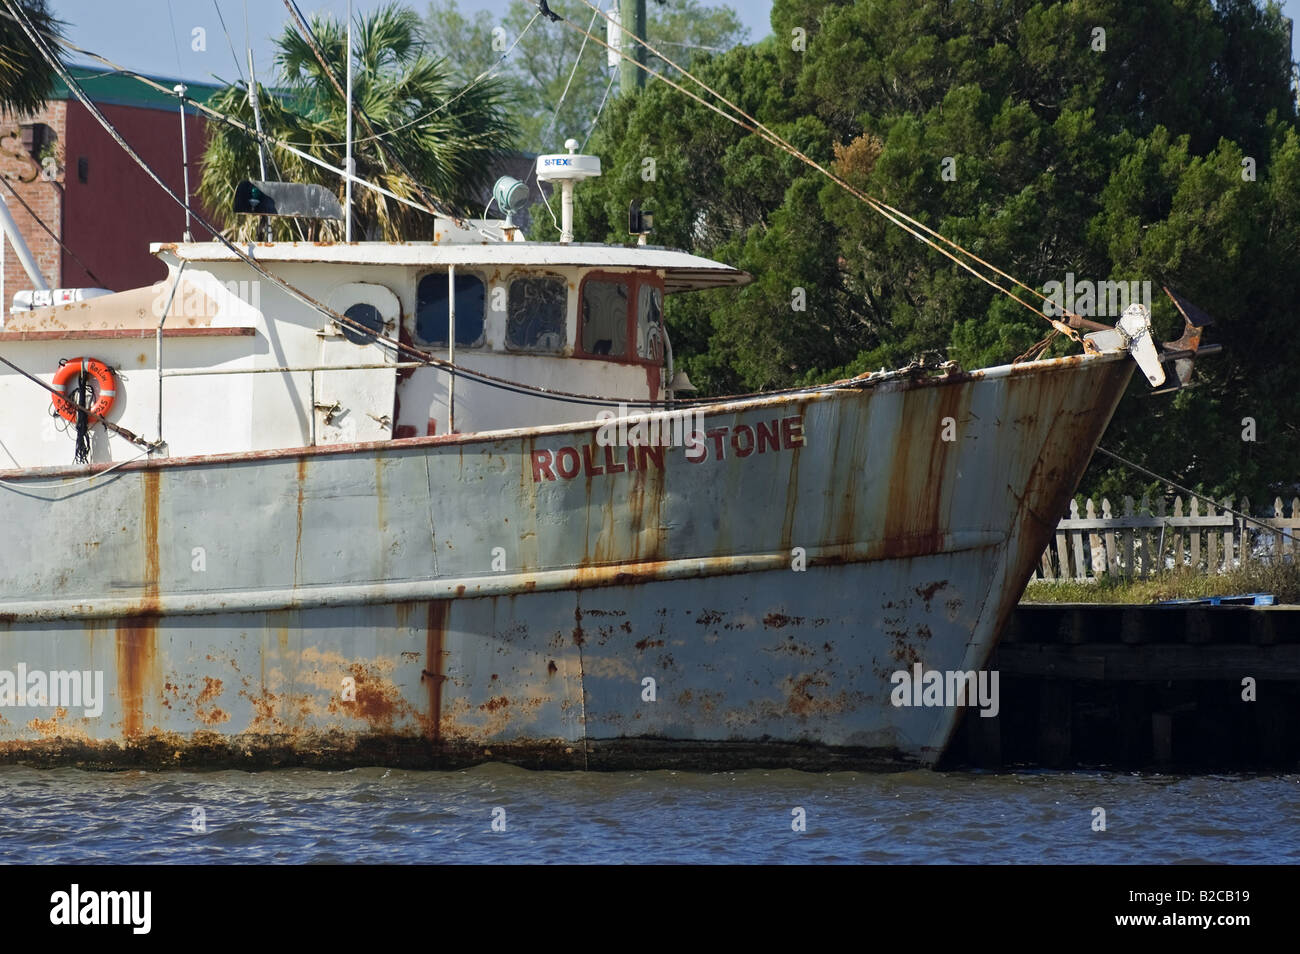 https://c8.alamy.com/comp/B2CB19/old-boat-docked-along-waterfront-of-apalachicola-florida-B2CB19.jpg